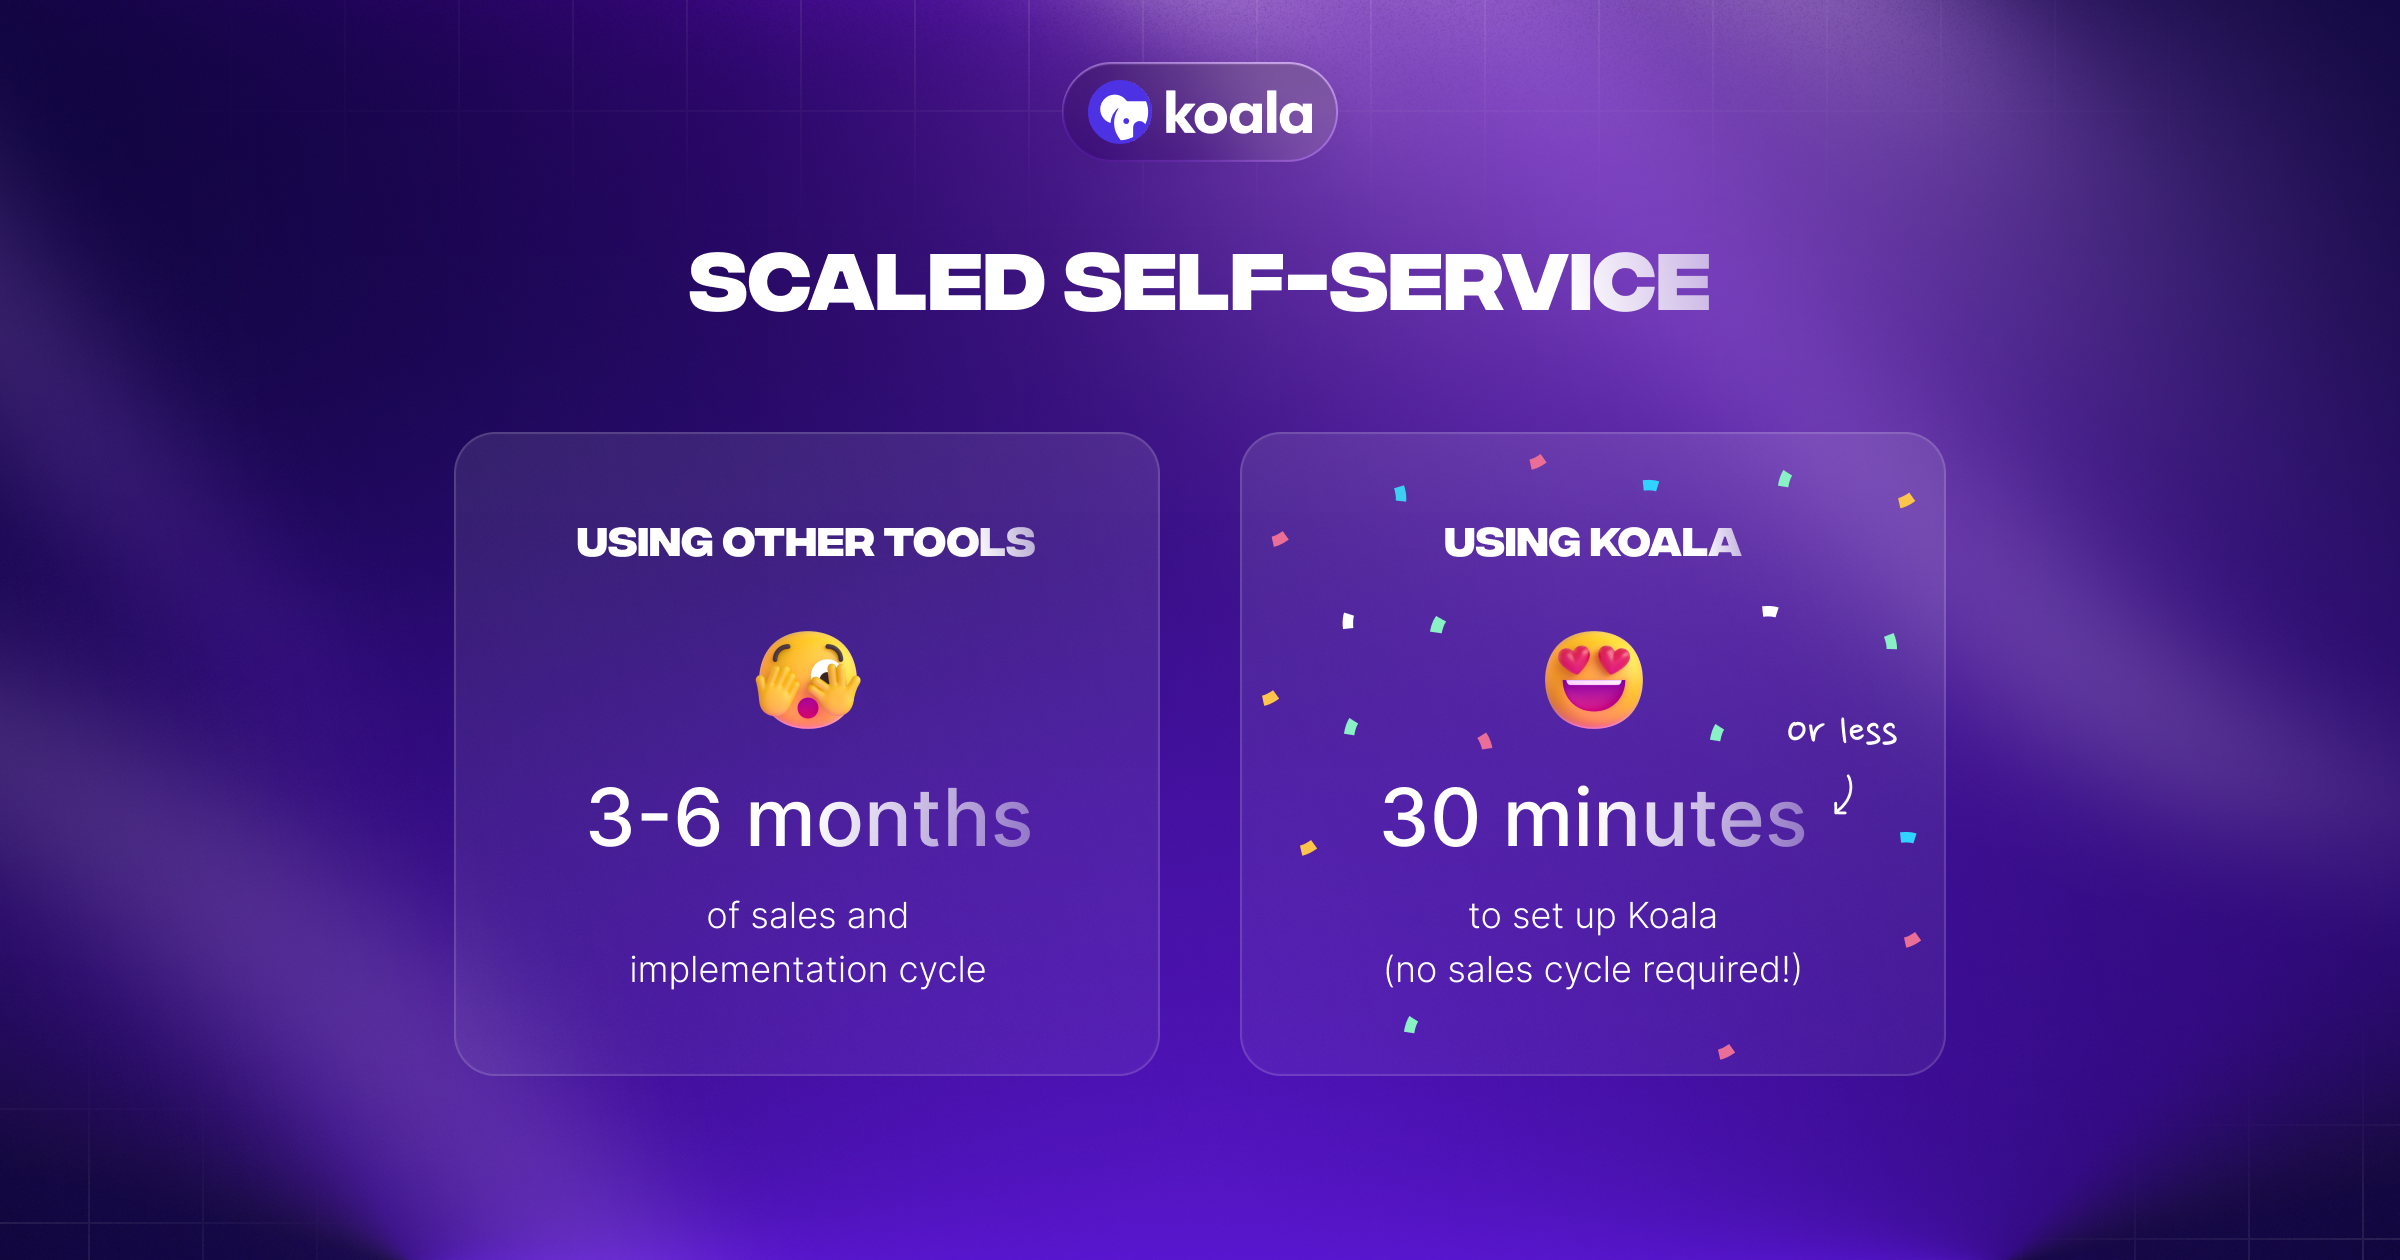 Scaled Self-service